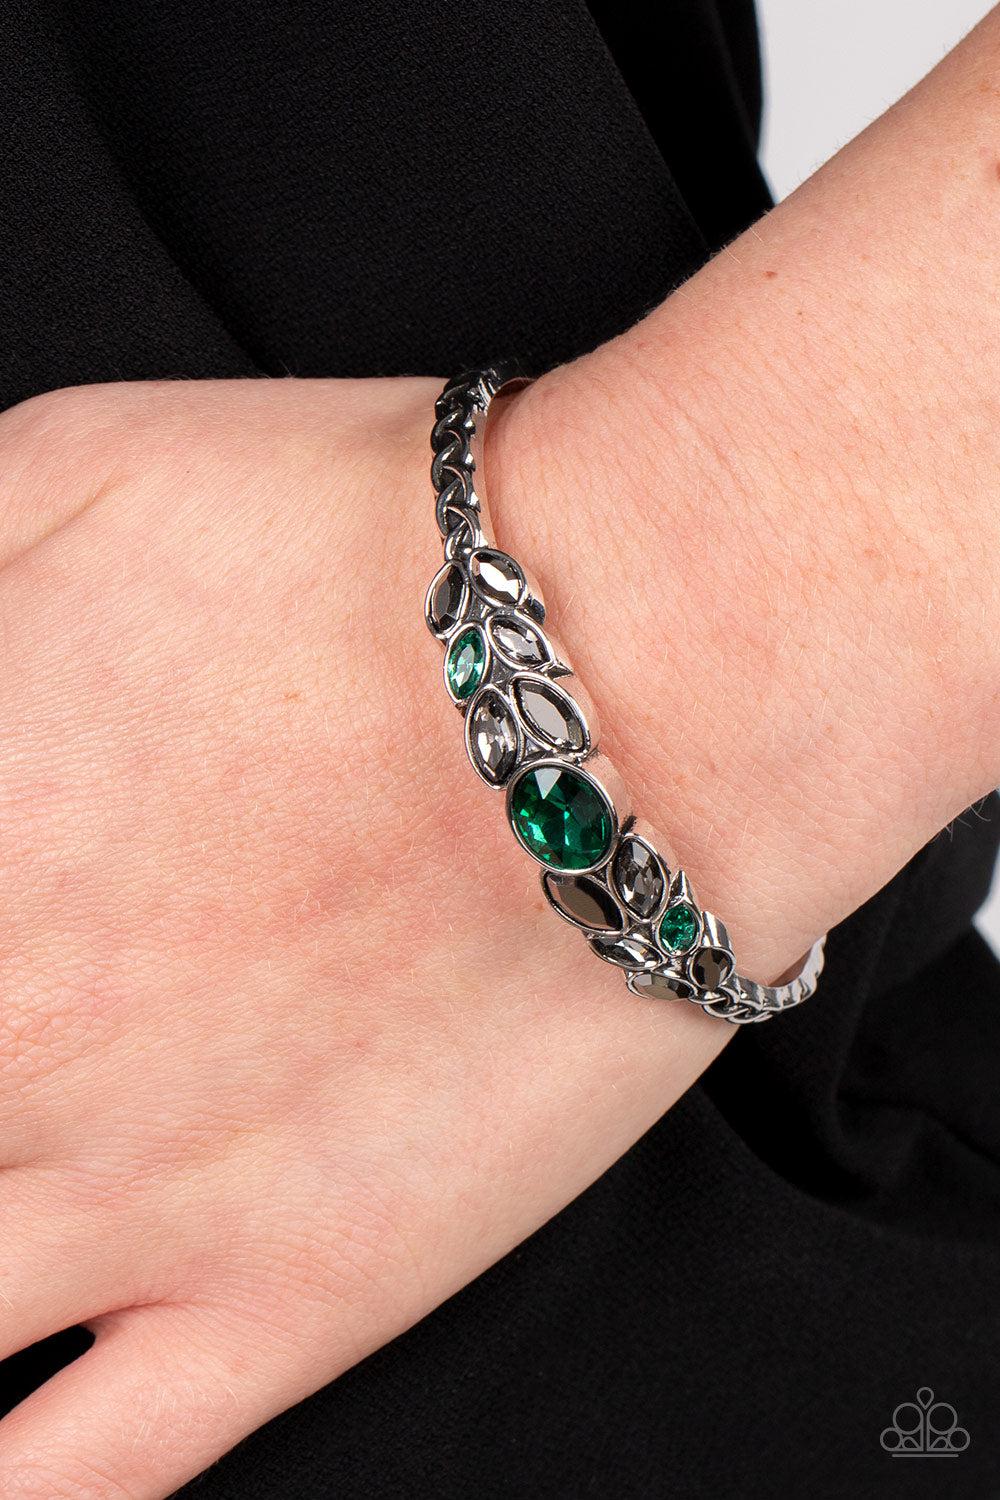 Vogue Vineyard Green Rhinestone Cuff Bracelet - Paparazzi Accessories- lightbox - CarasShop.com - $5 Jewelry by Cara Jewels